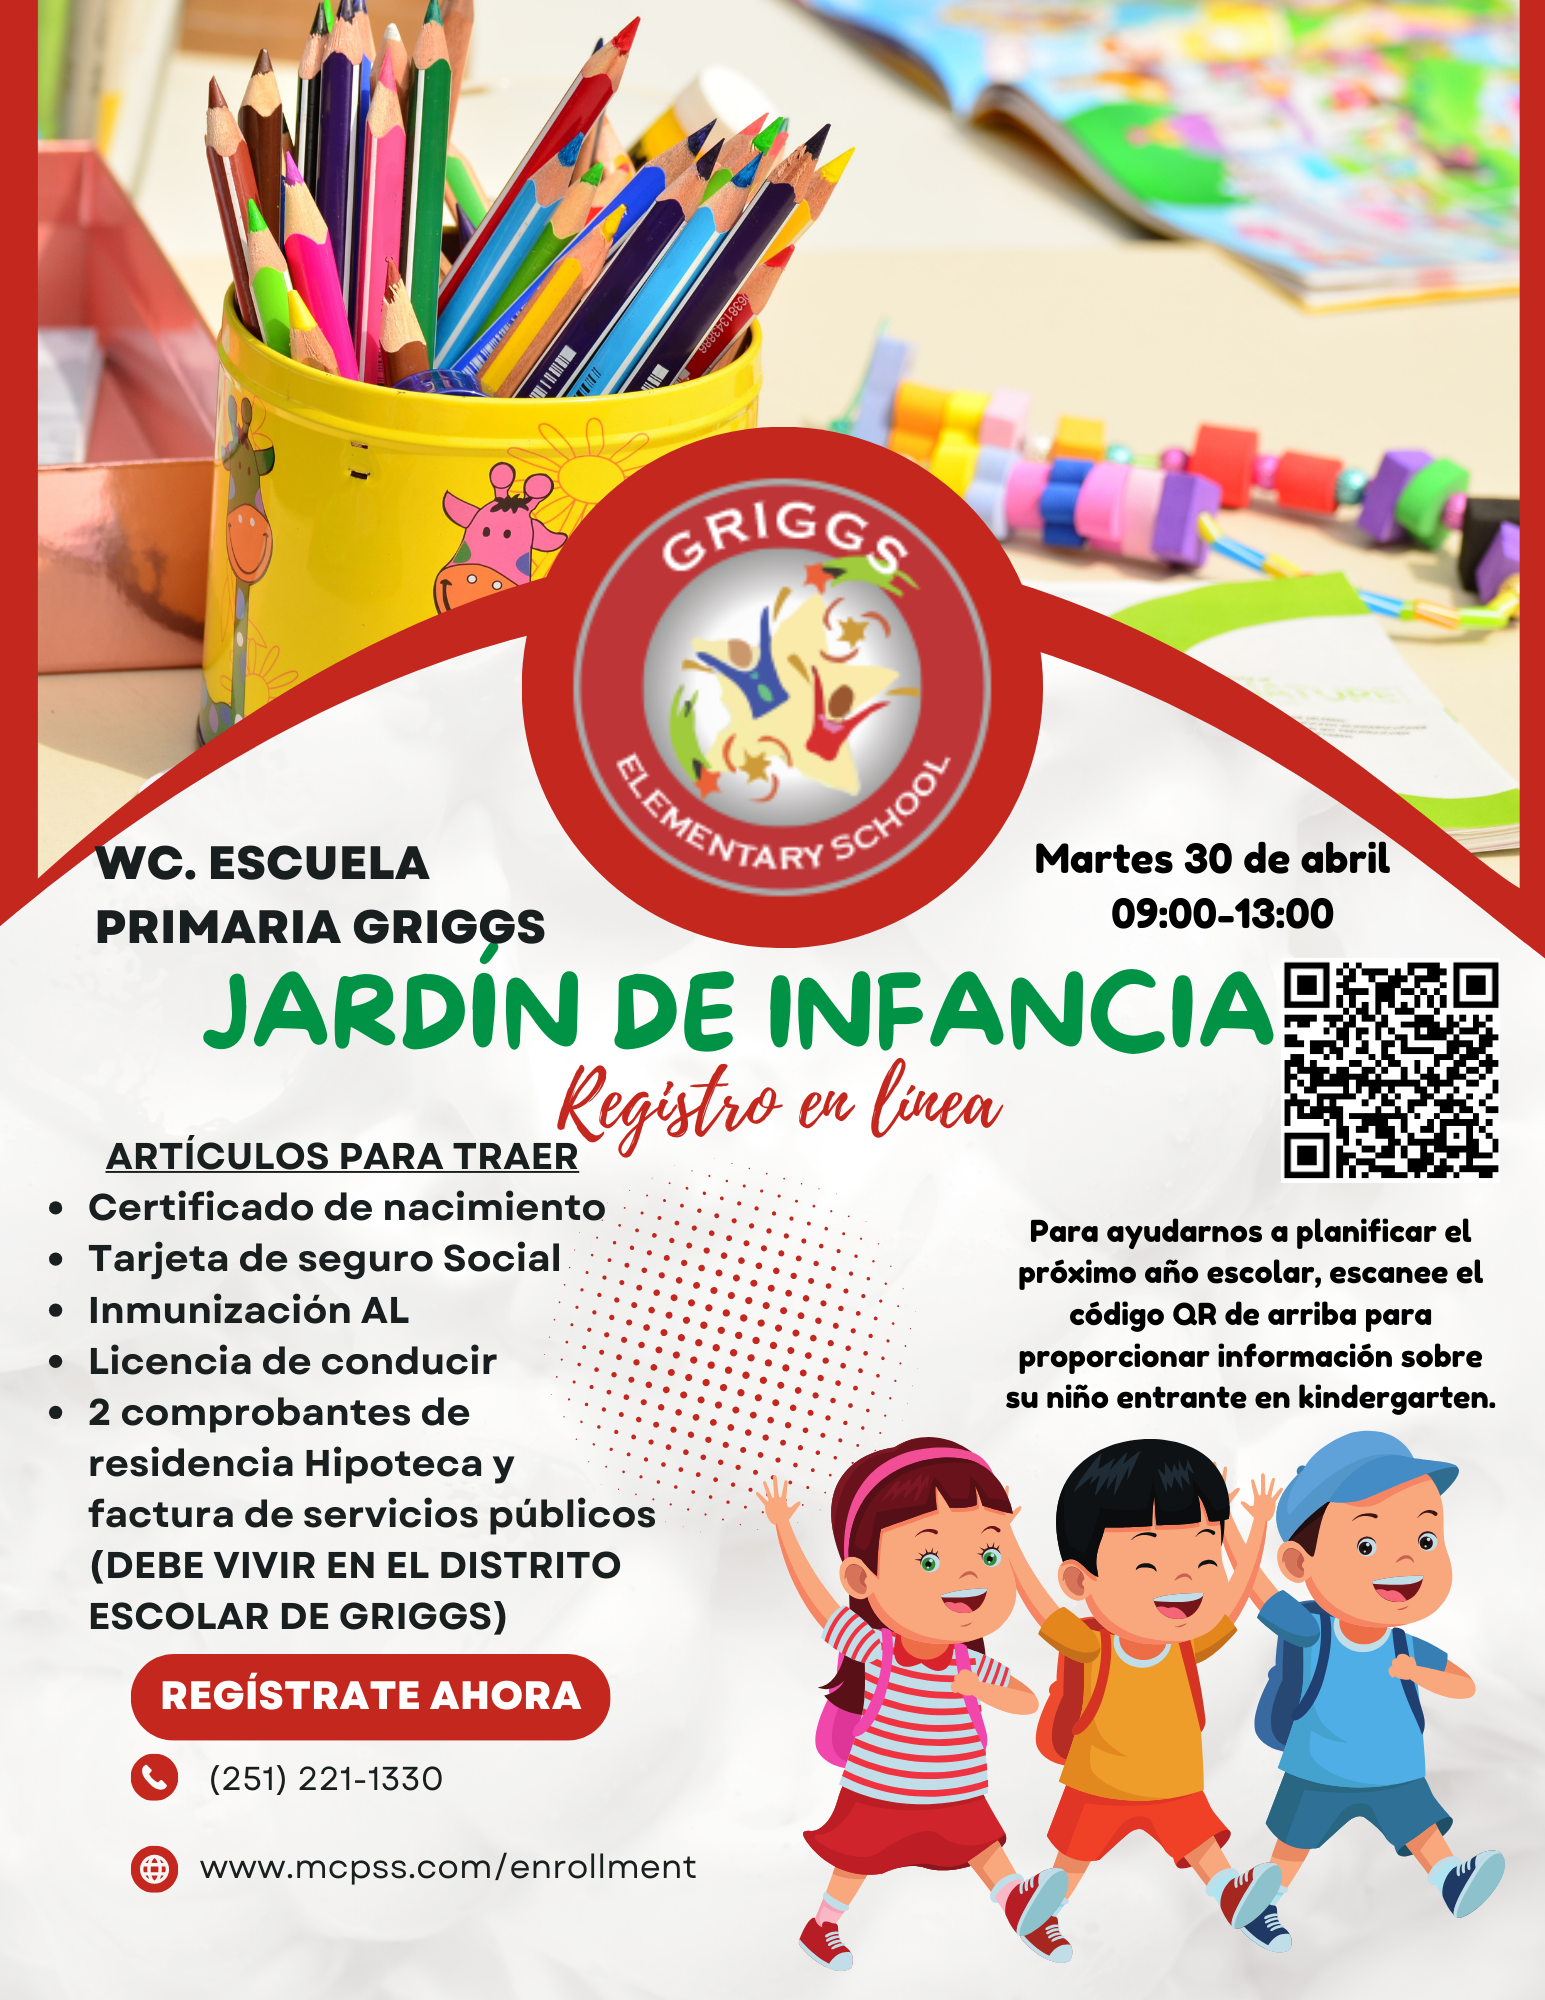 Kindergarten Visitation Flyer in Spanish